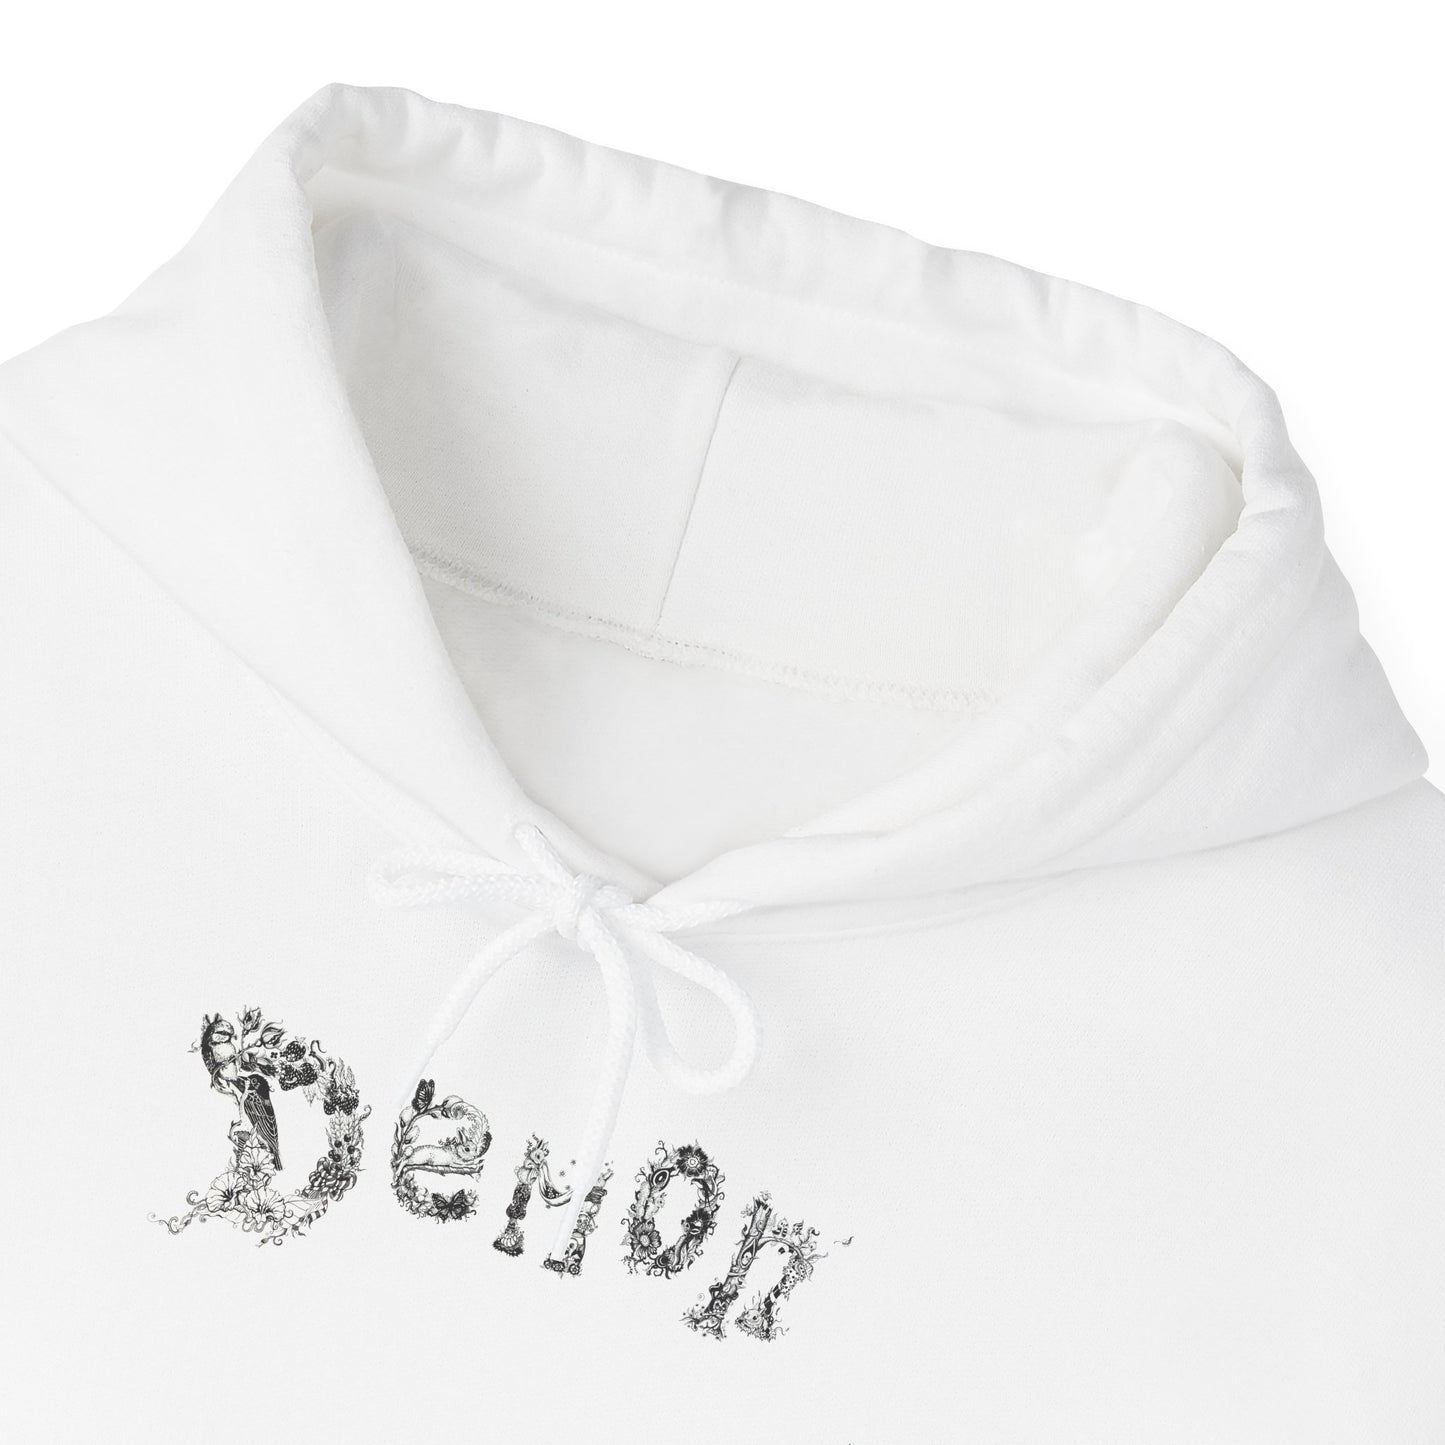 "Demon" Tin Foil Wear vs Julie Nord